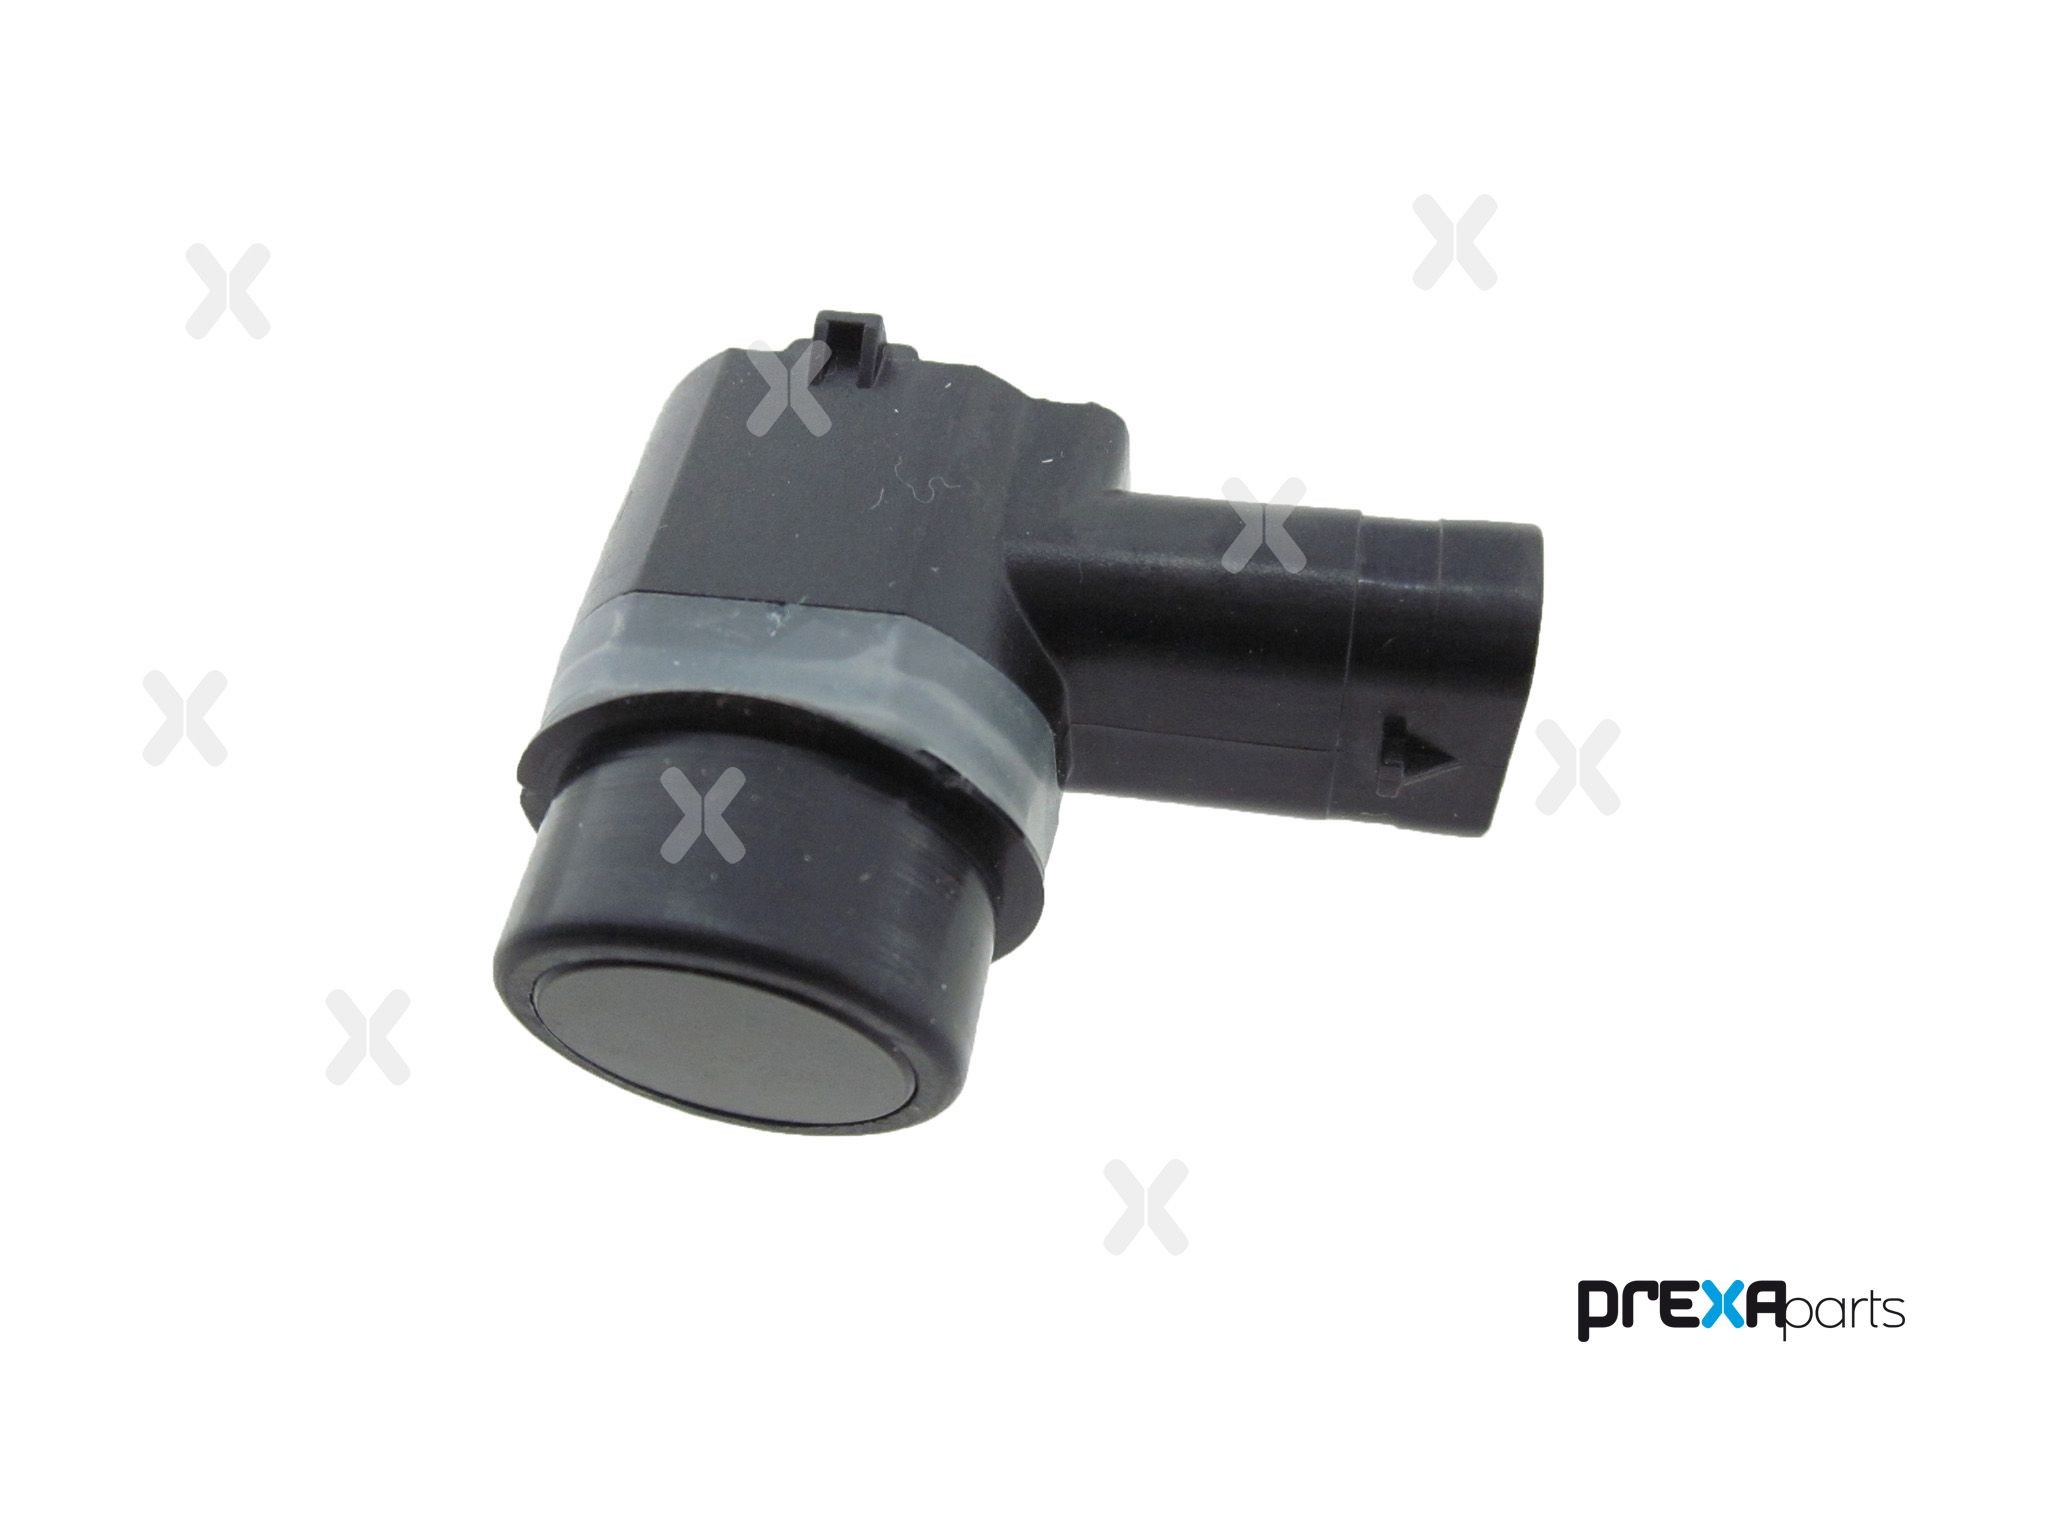 PREXAparts Ultrasonic Sensor Reversing sensors P103002 buy